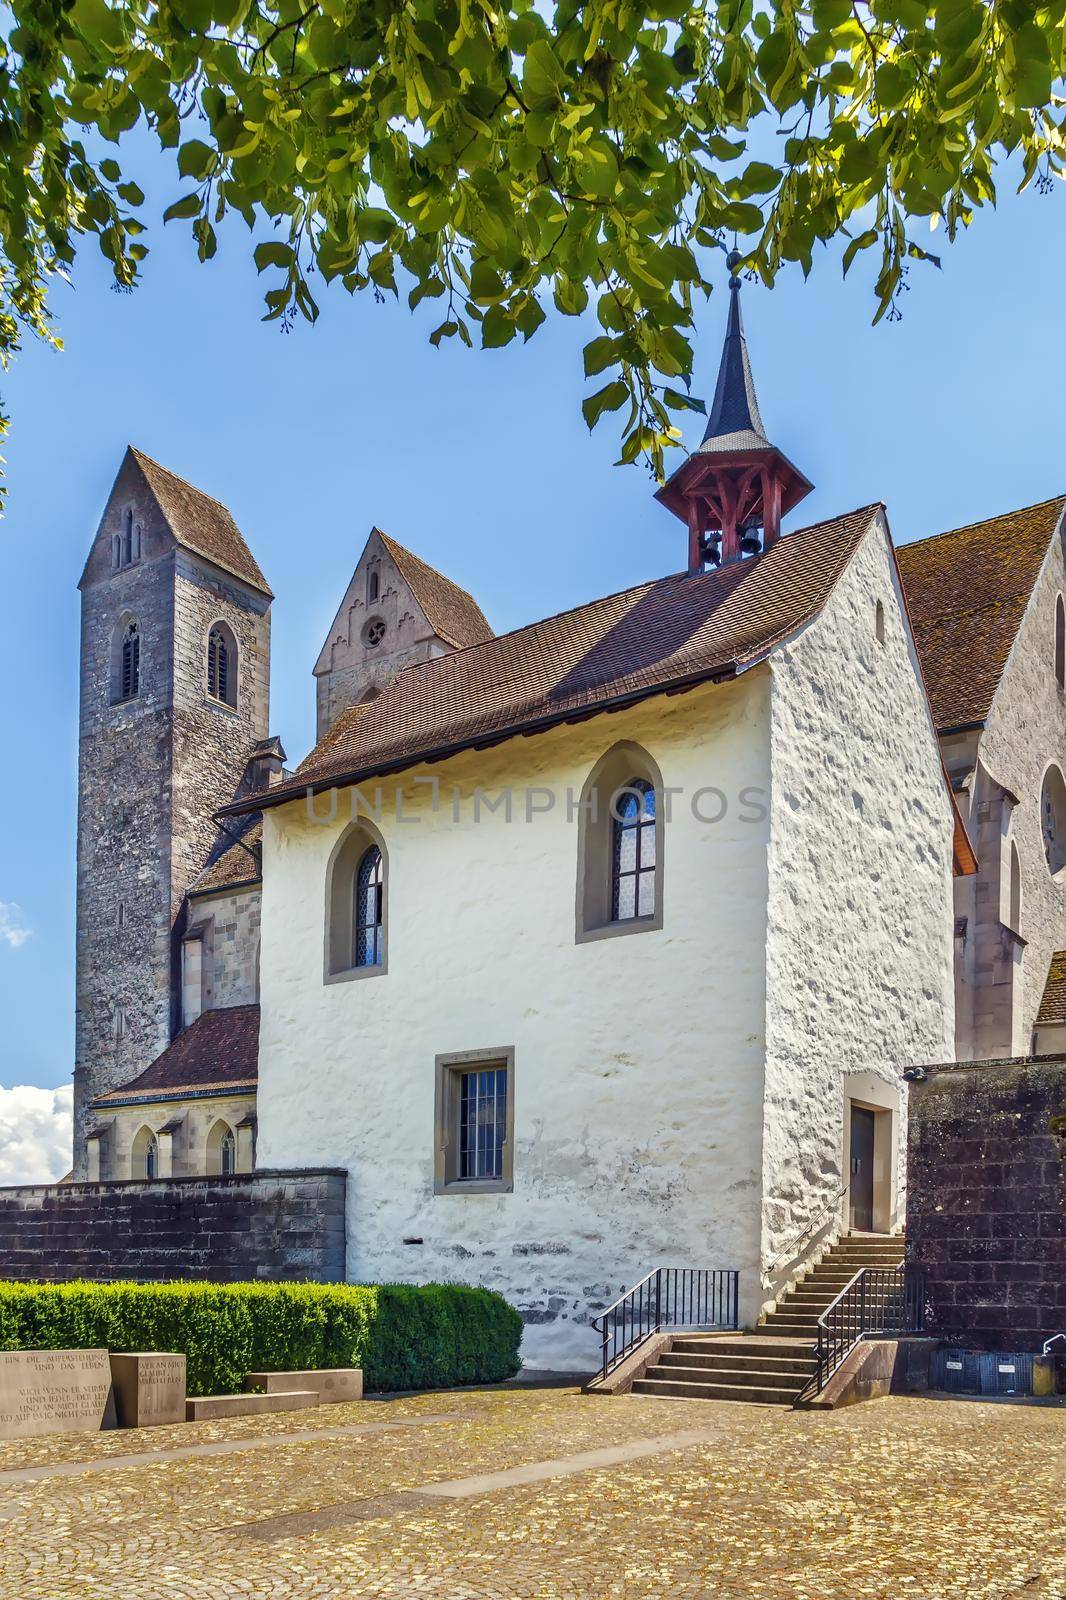 St. Mary's Chapel (Liebfrauenkapelle) in Rapperswil, Switzerland